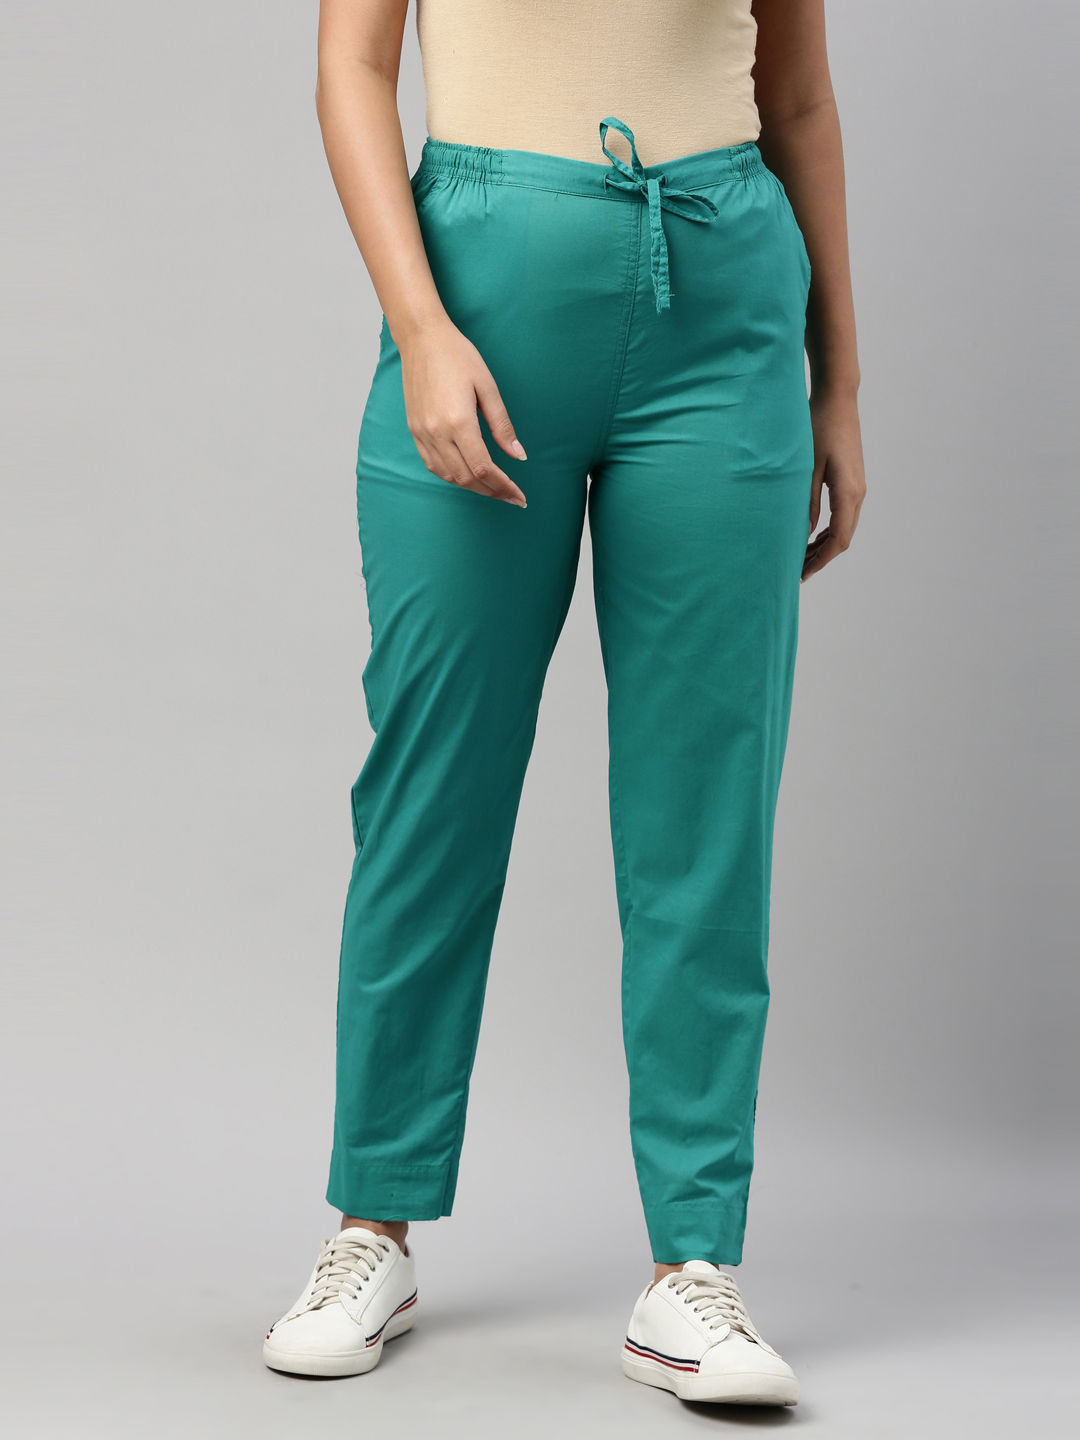 Goes Green Cargo Pants | Green Cargo Pants Zippers | Style Green Cargo Pants  - Cargo - Aliexpress